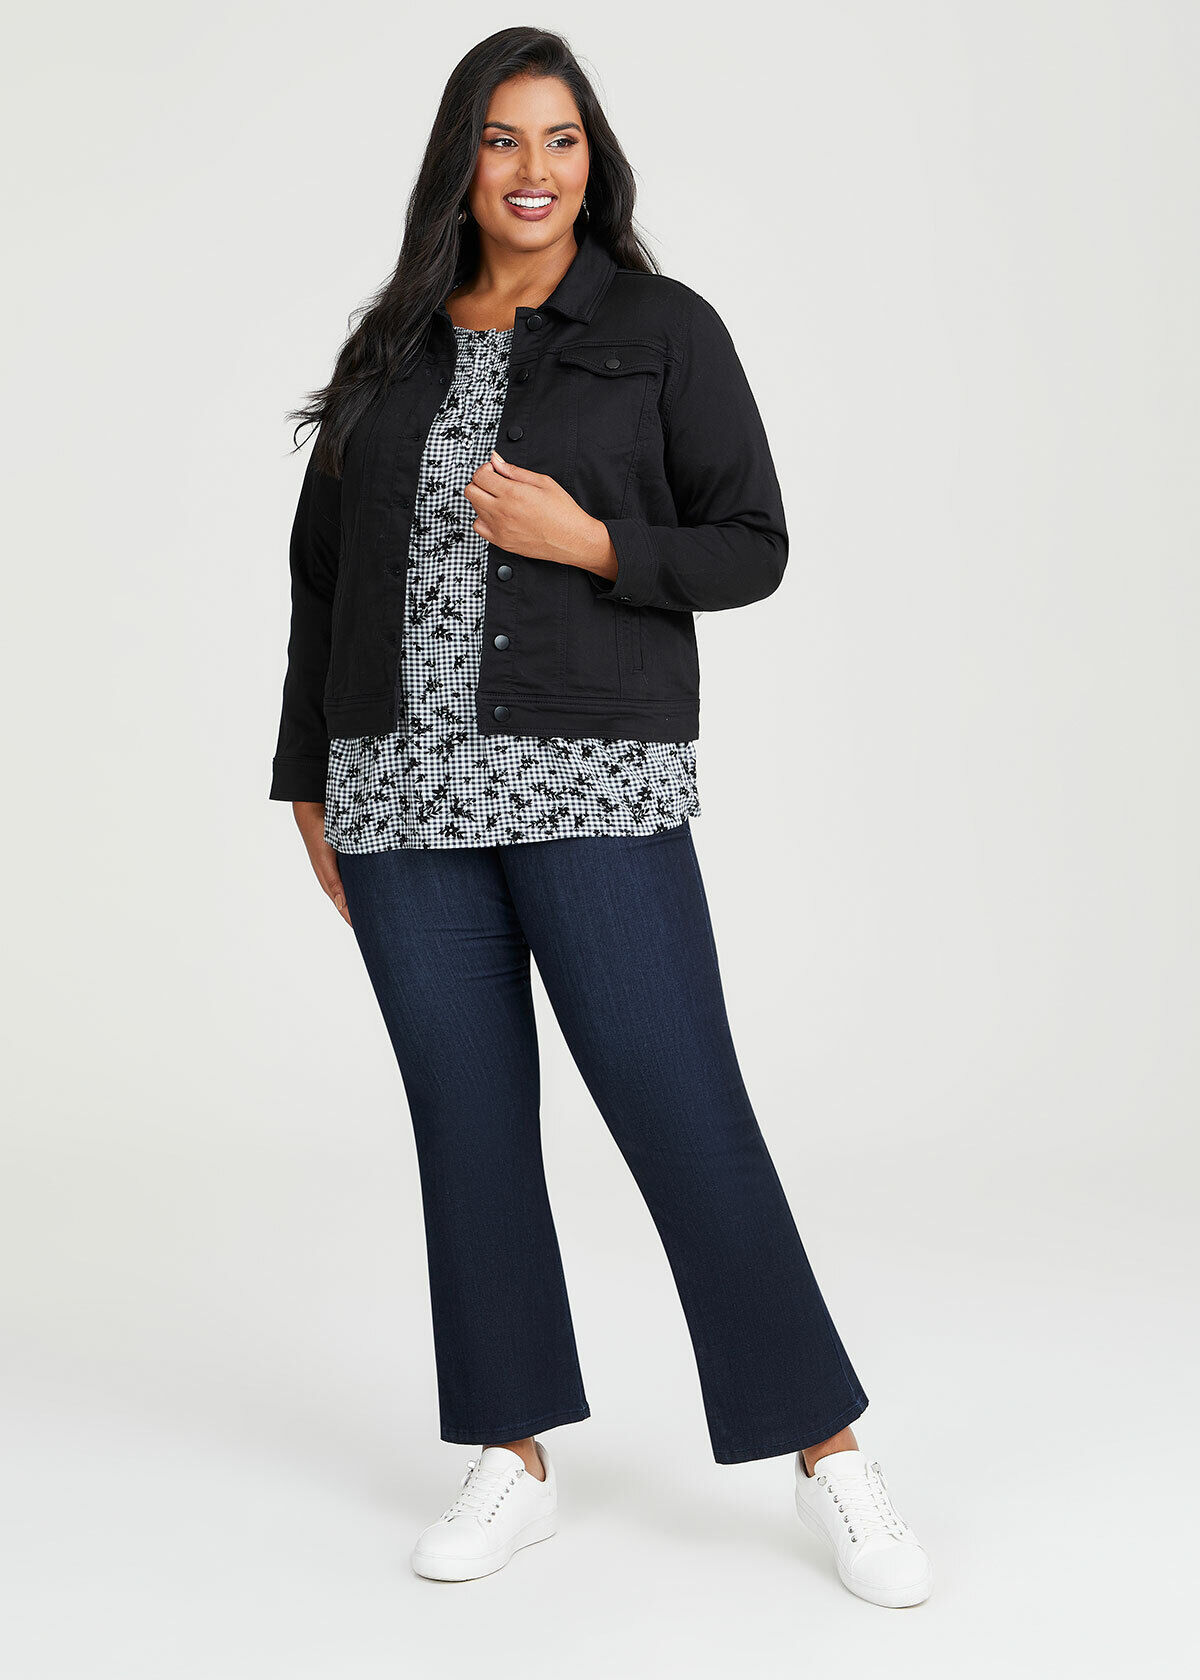 Plus-Size Women's Denim Coats, Jackets & Blazers | Nordstrom